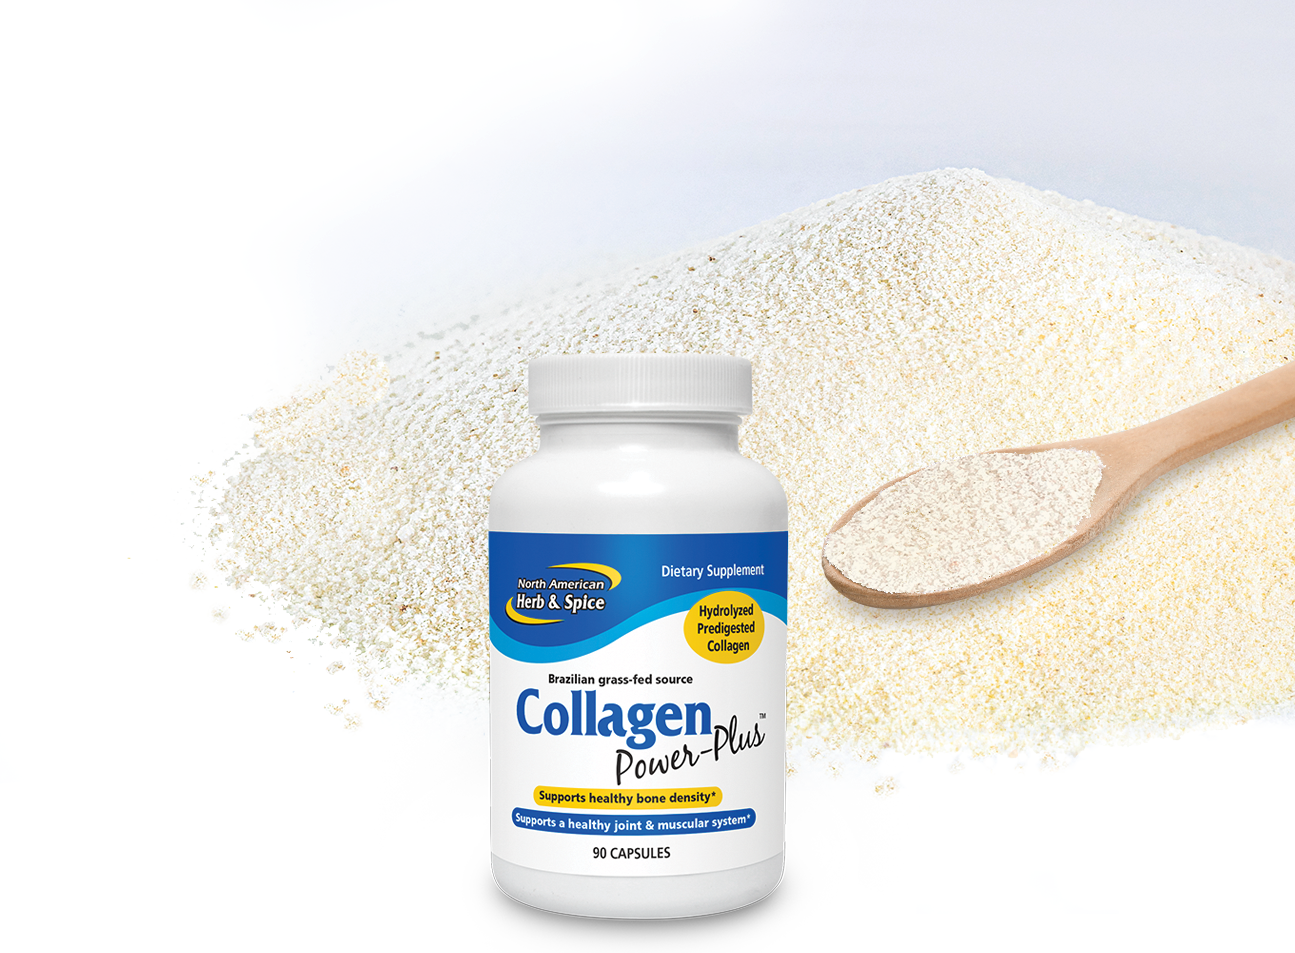 Collagen ingredient with Collagen Power-Plus product